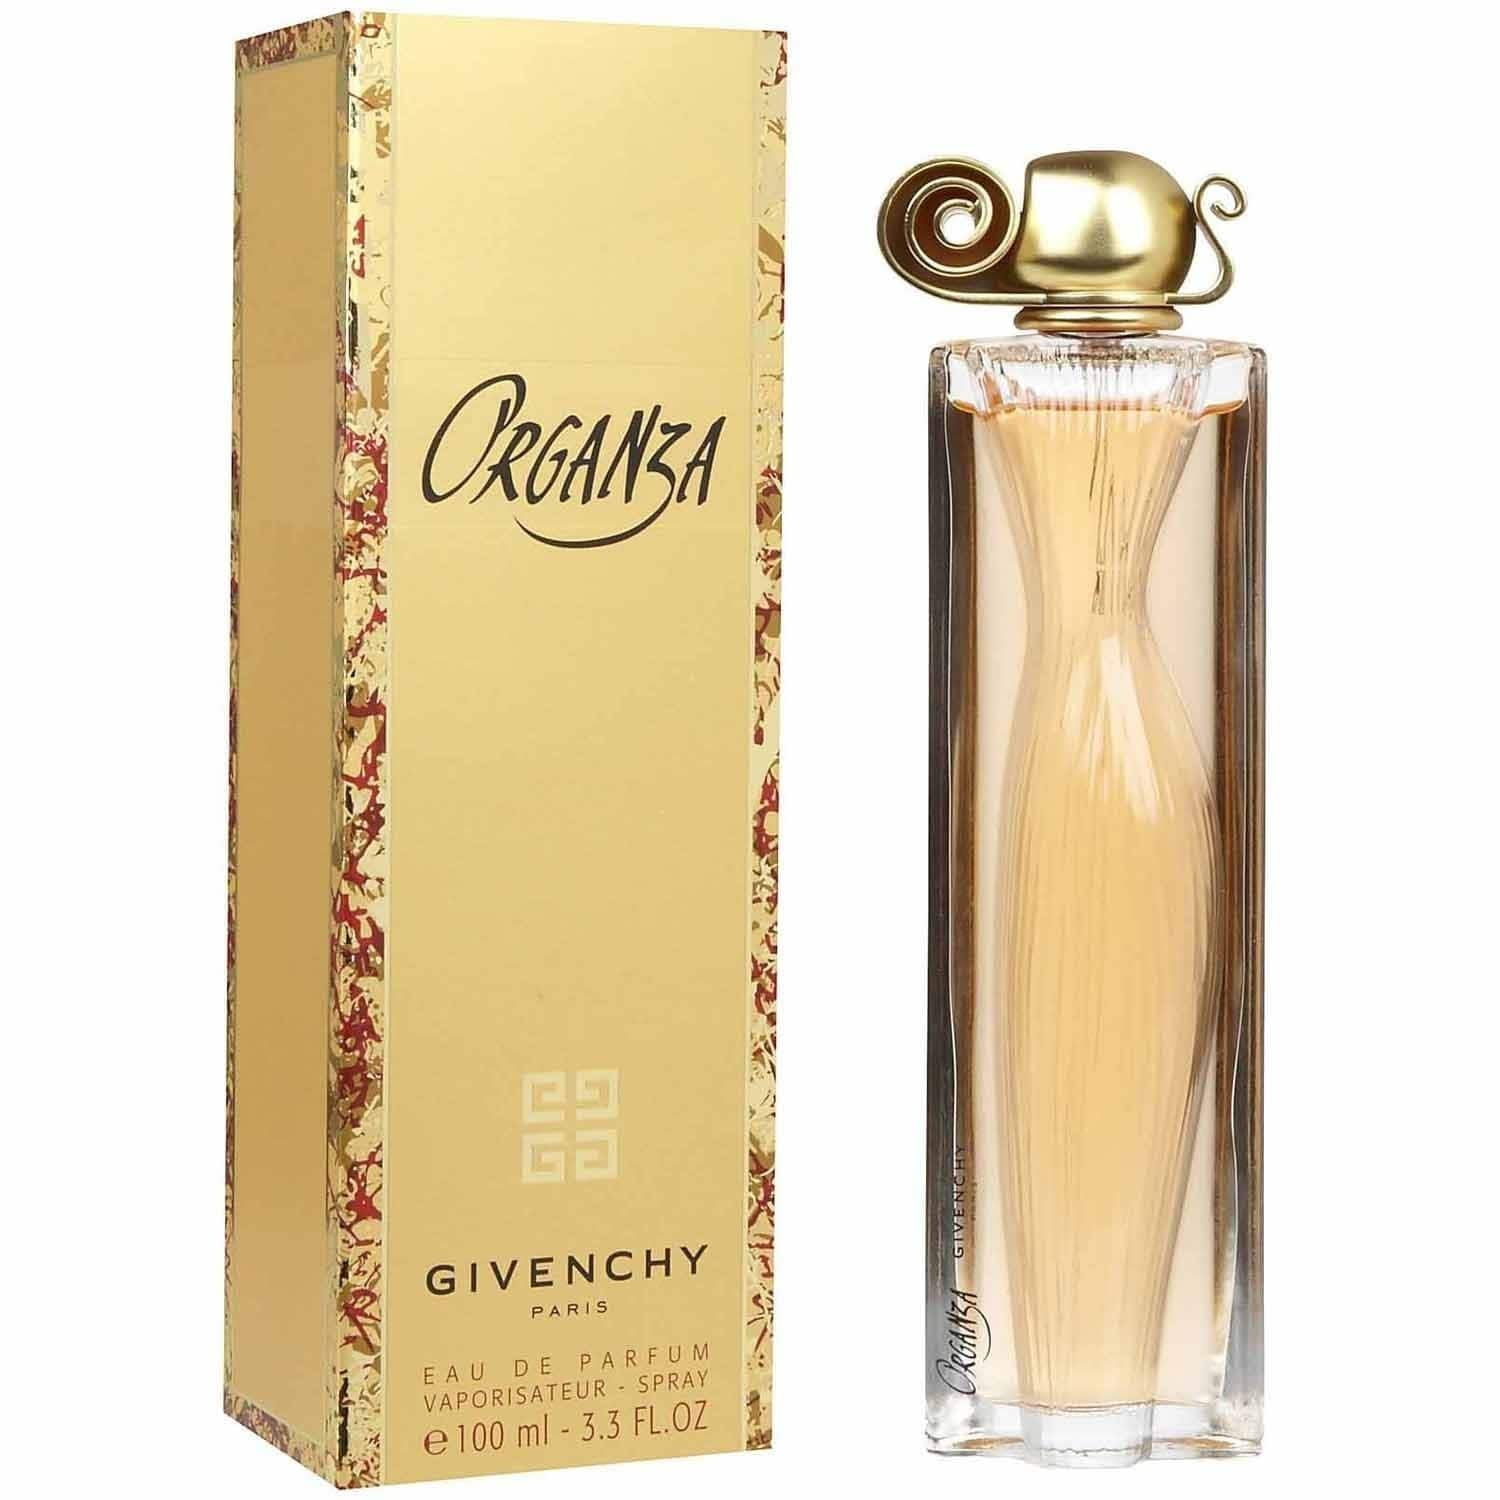 Givenchy for Organza 3.3 Oz Perfume Parfum, de Women, Eau